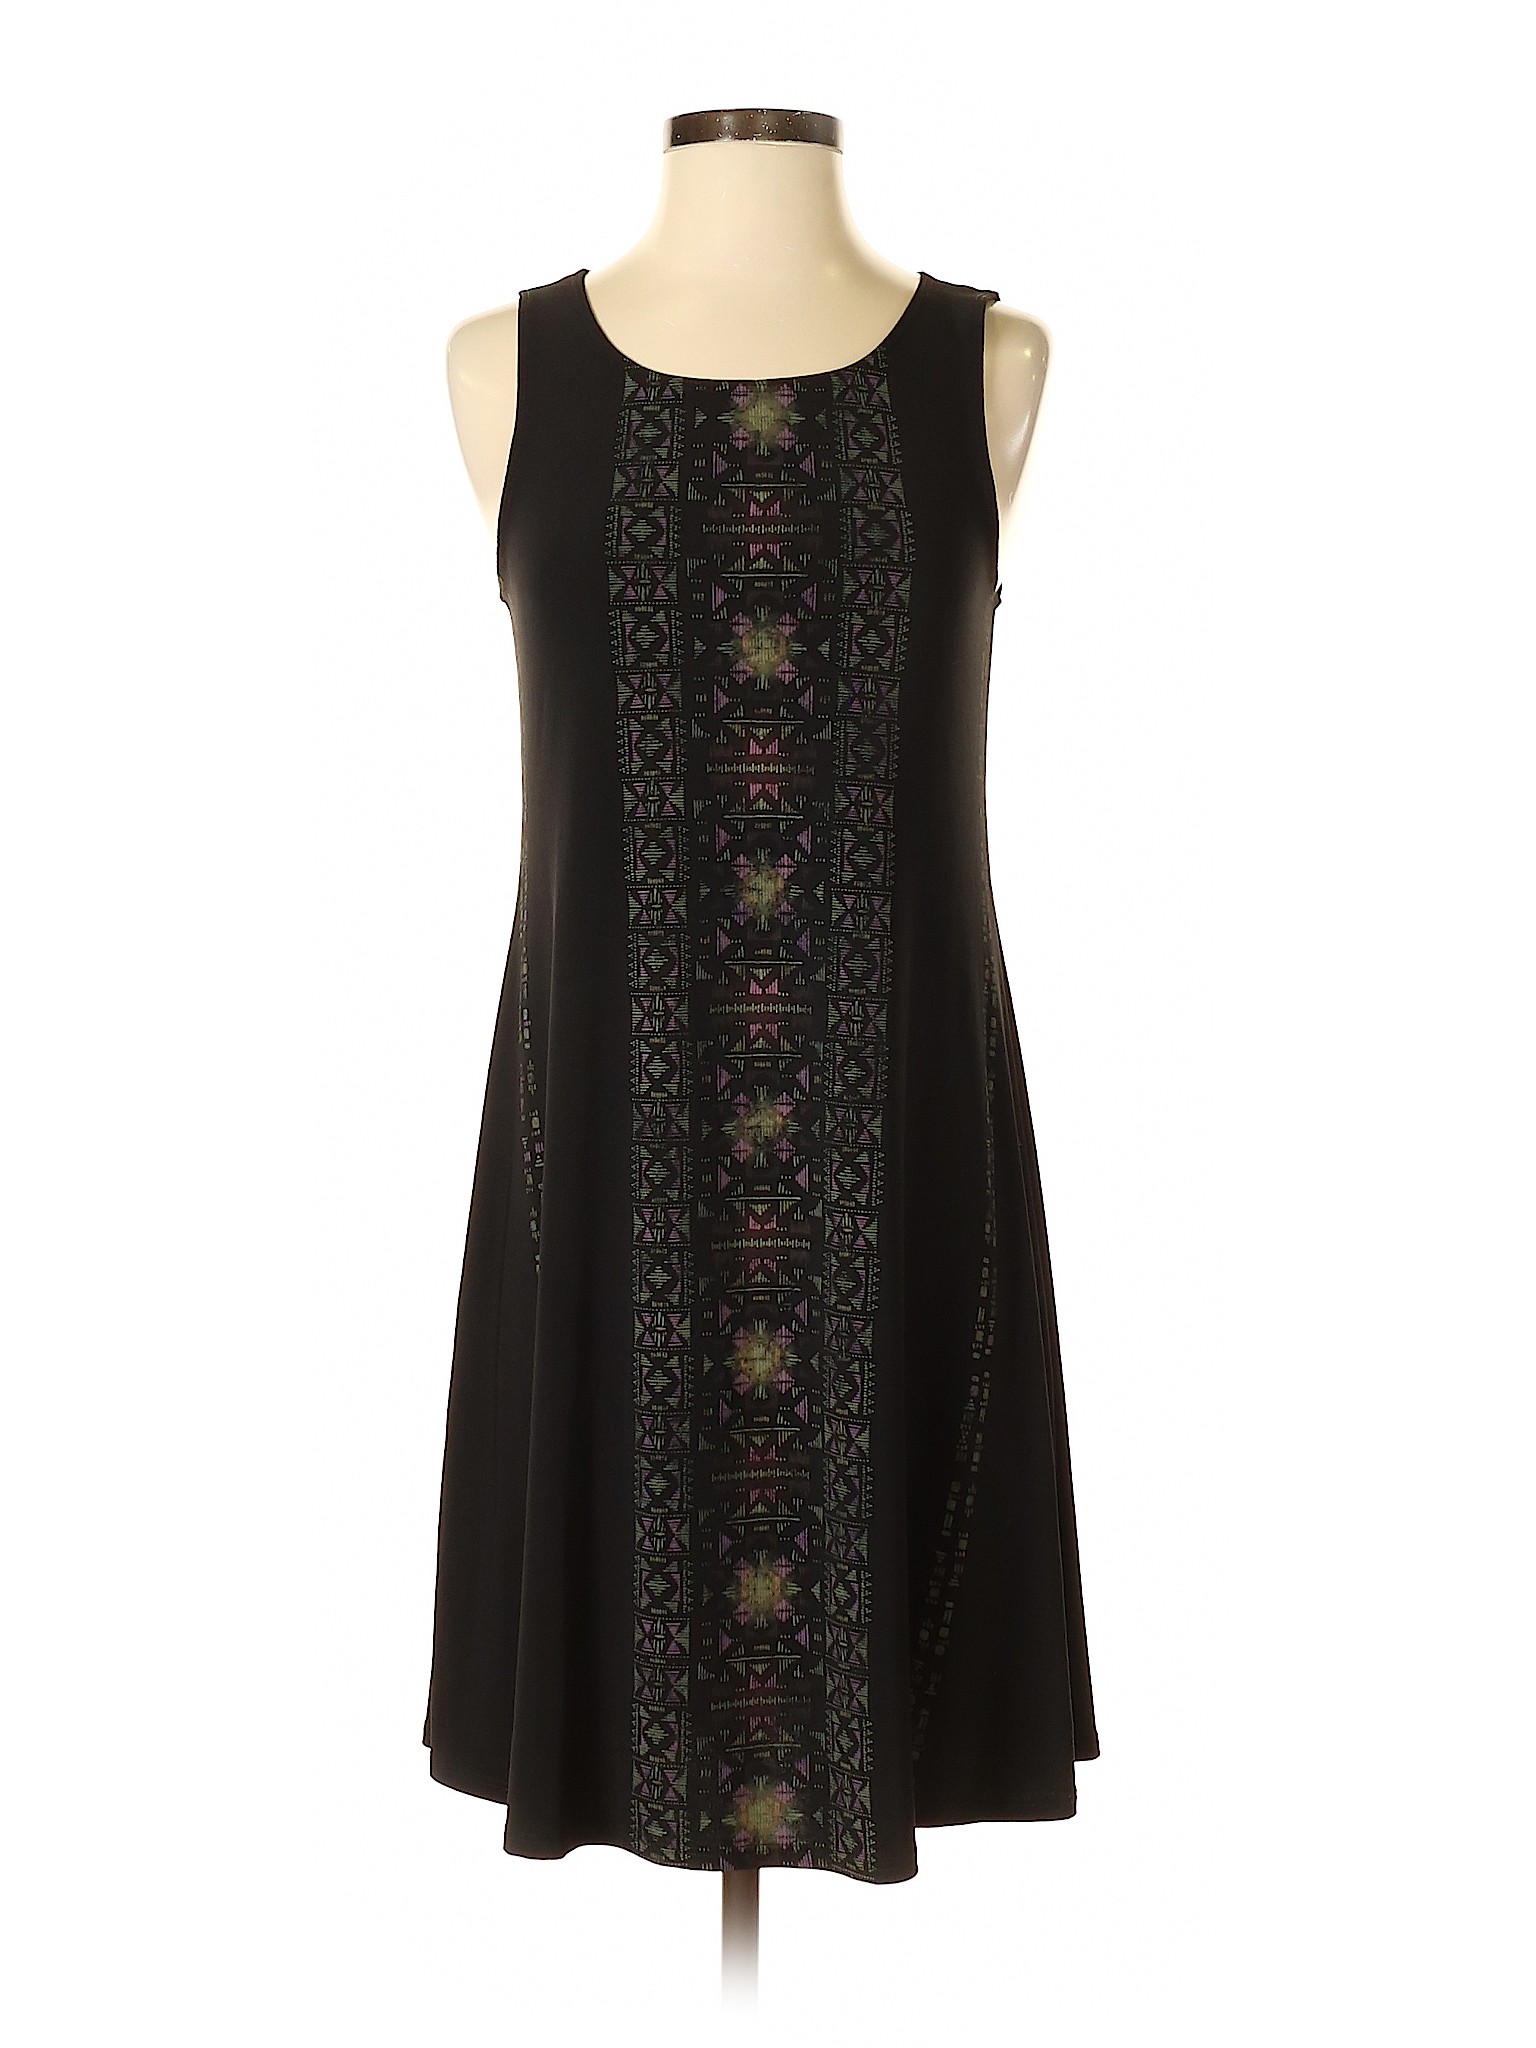 Maurices Women Black Casual Dress XS | eBay